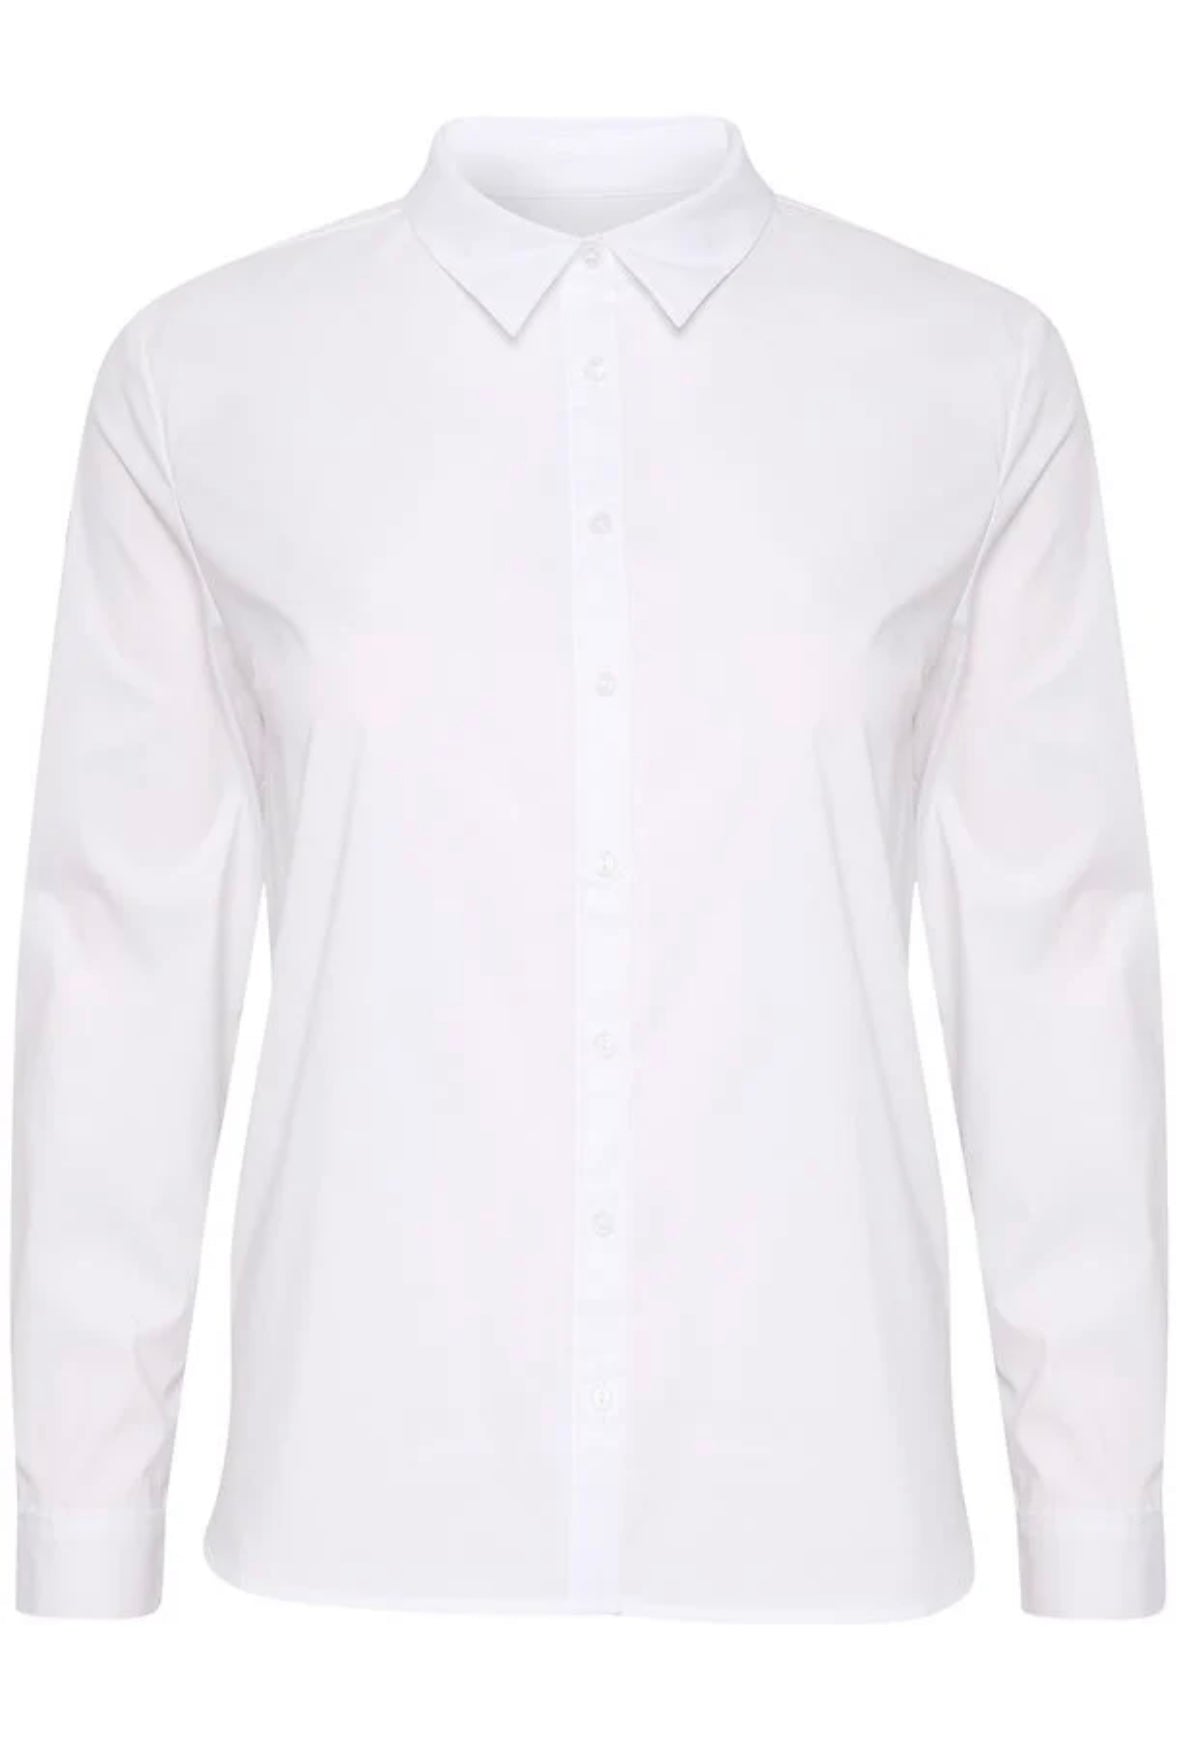 Part Two Bimini shirt - Bright White